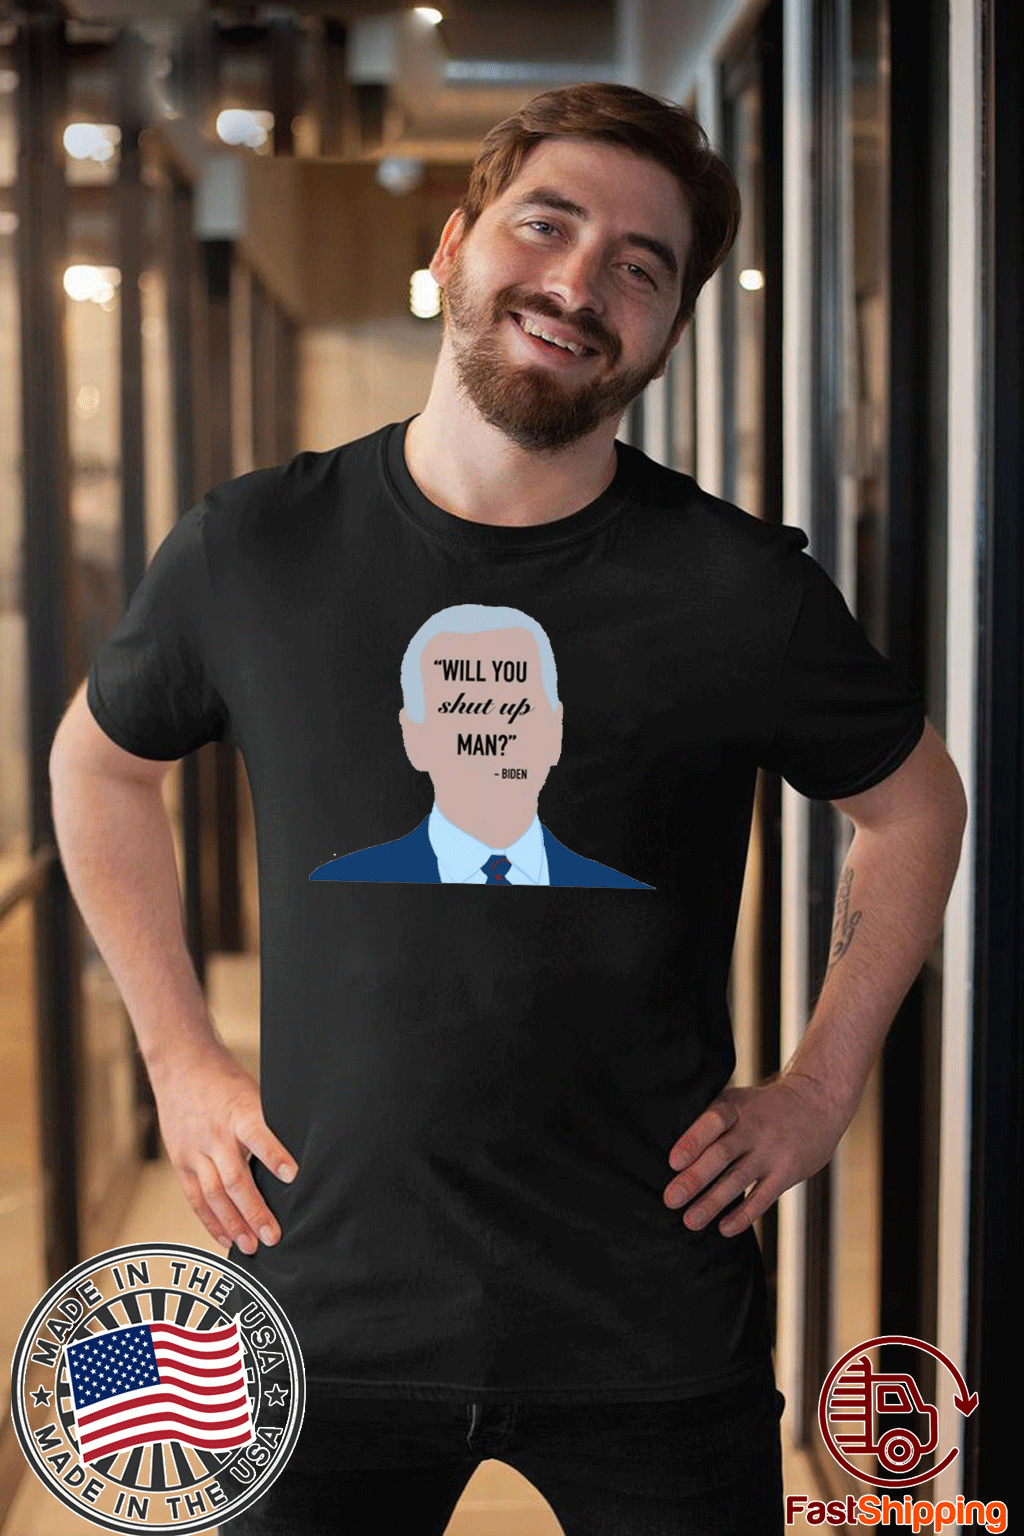 Will you shut up man? T-Shirt - Will You Shut Up Man Biden Trump Shirt